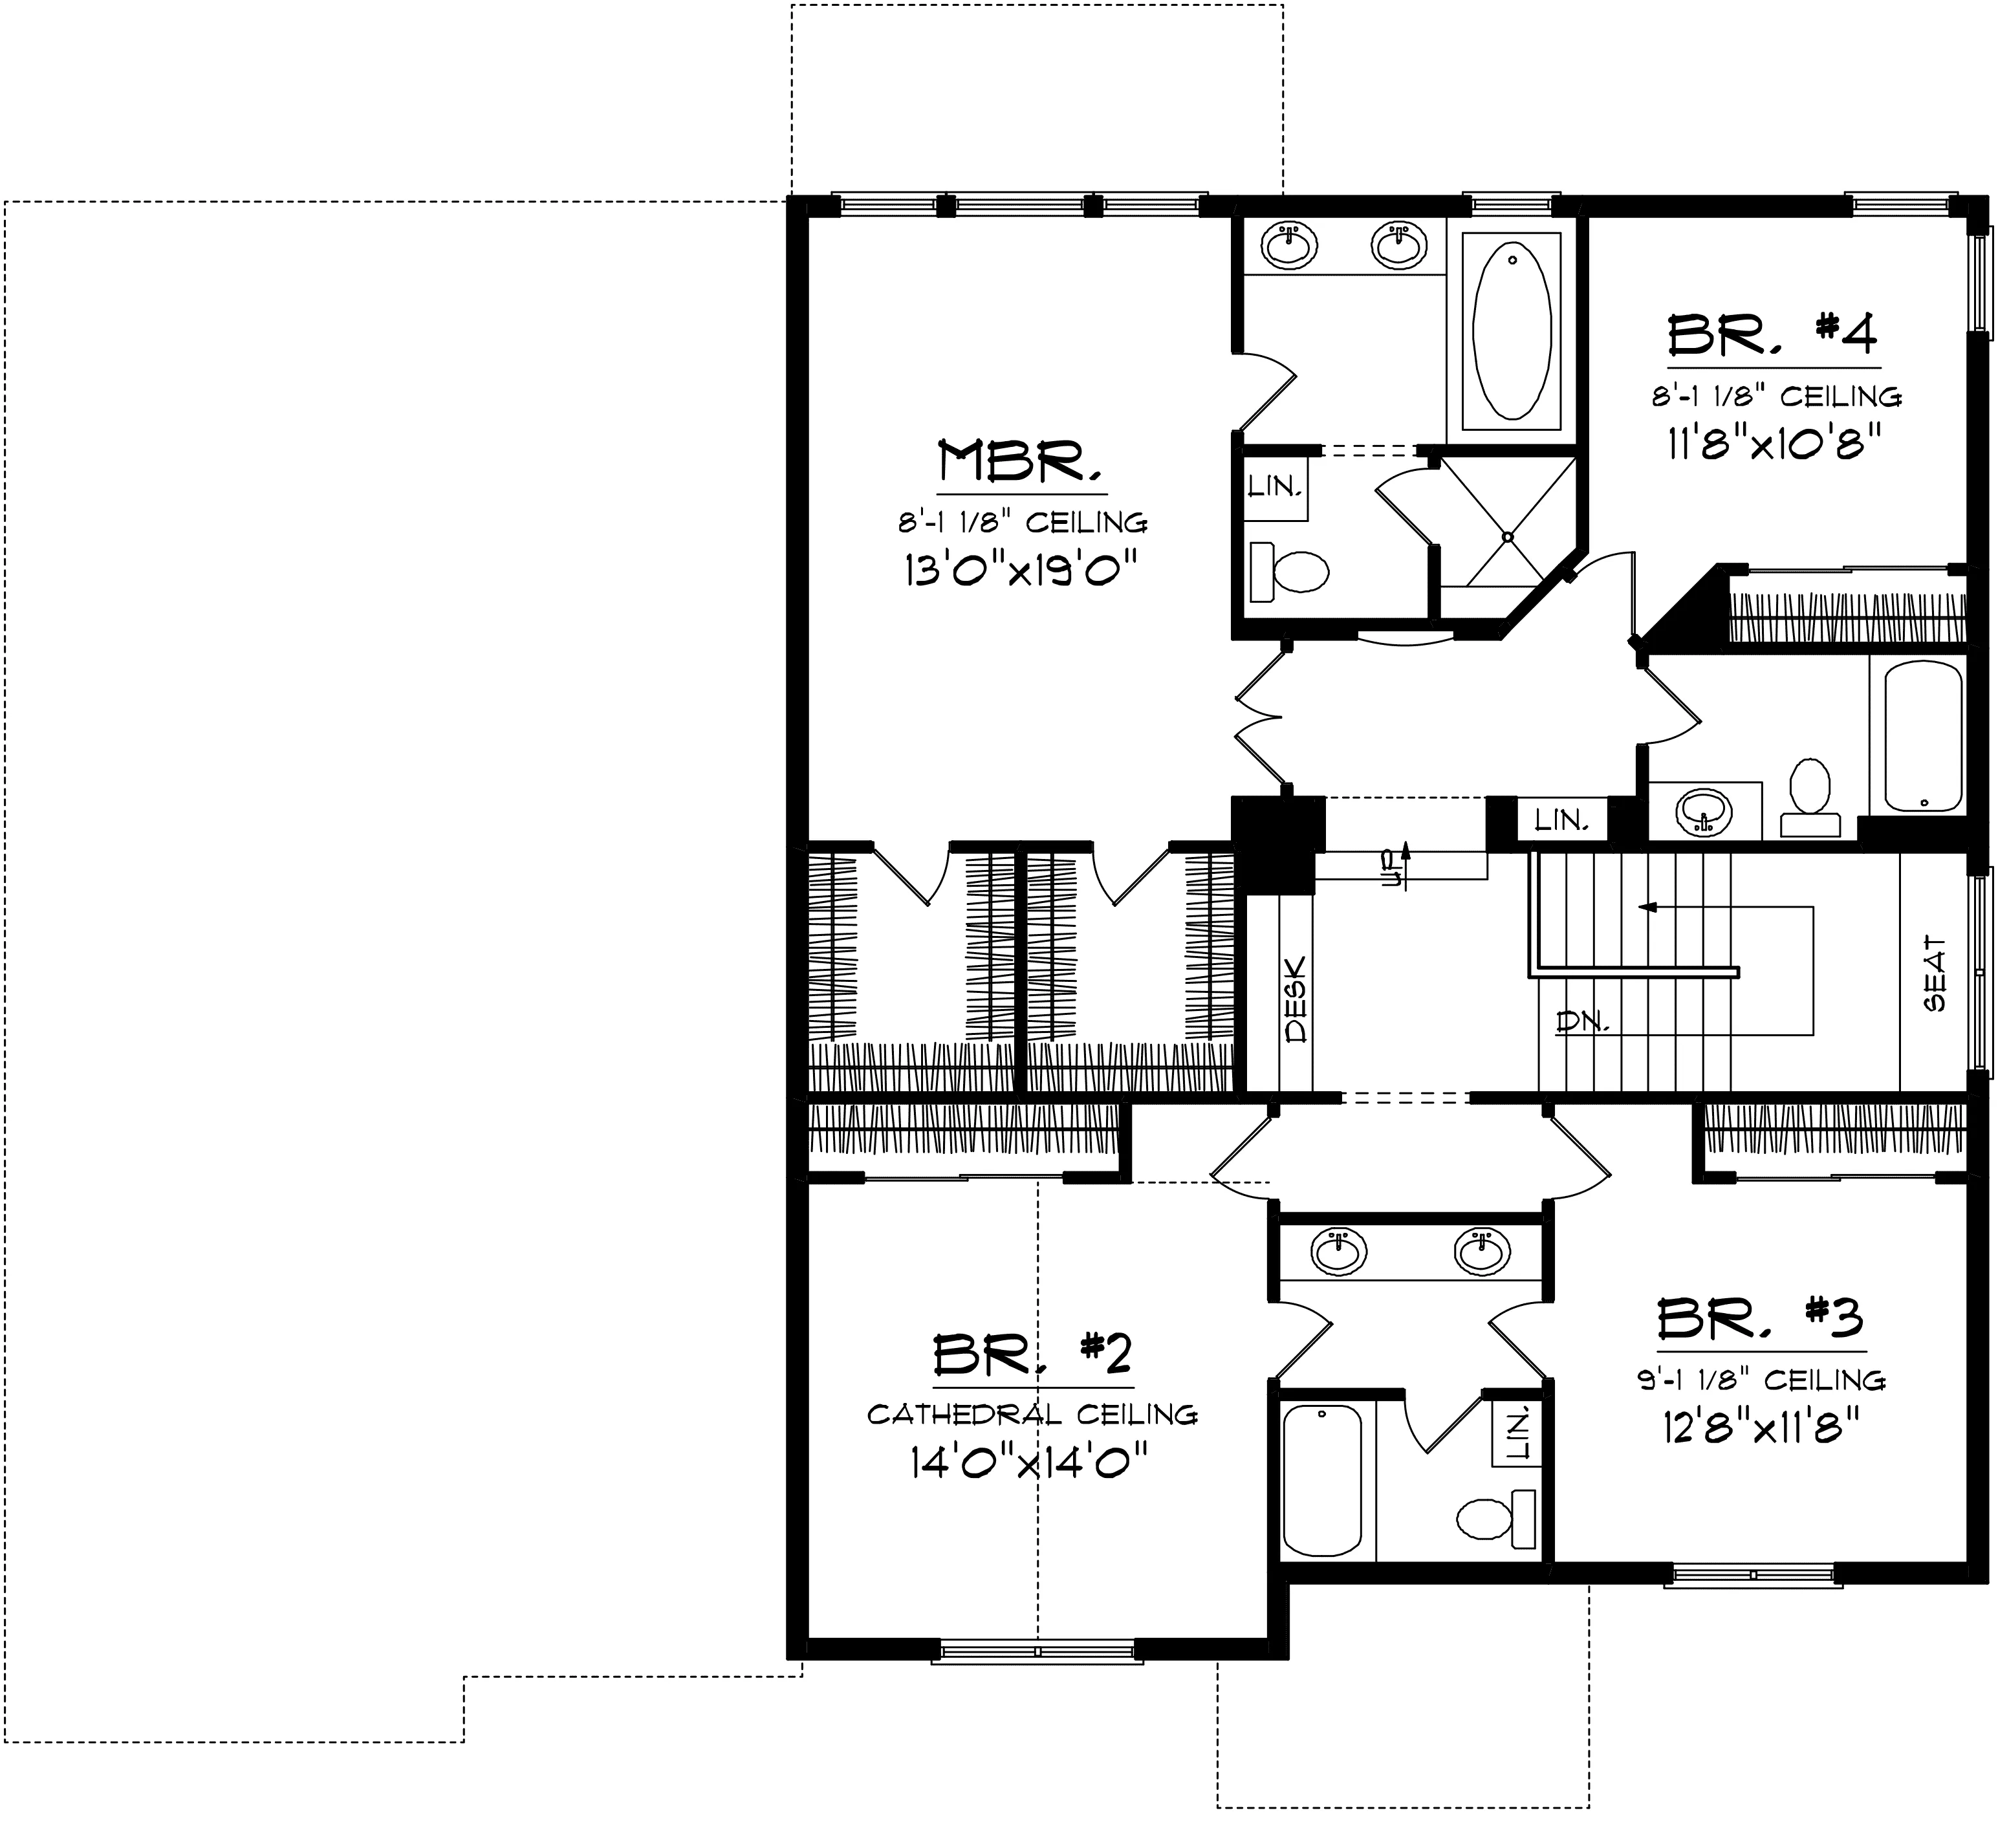 Arts & Crafts House Plan Second Floor - Renette European Home 051D-0686 - Shop House Plans and More